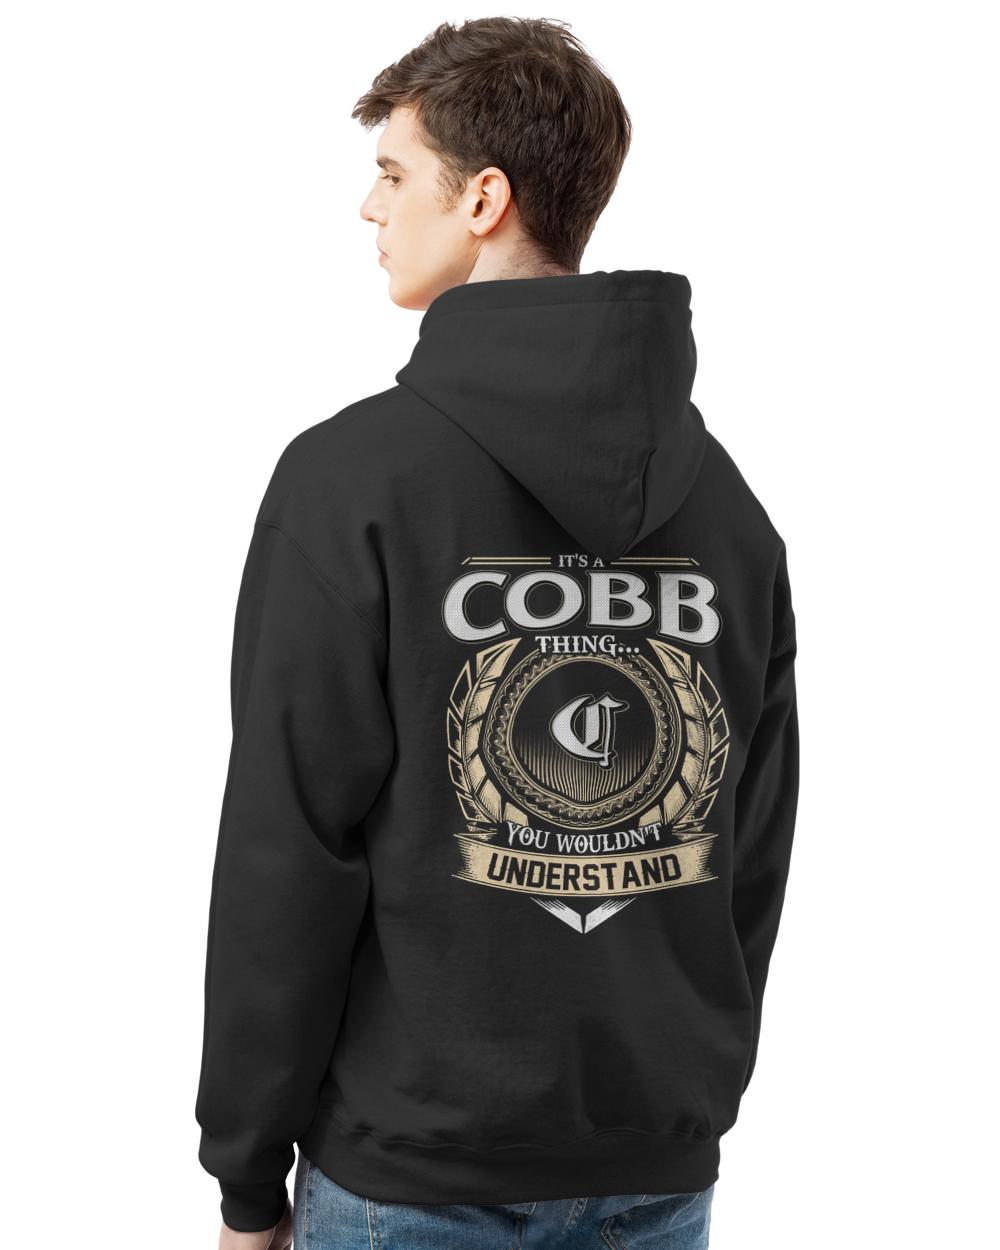 COBB-13K-46-01